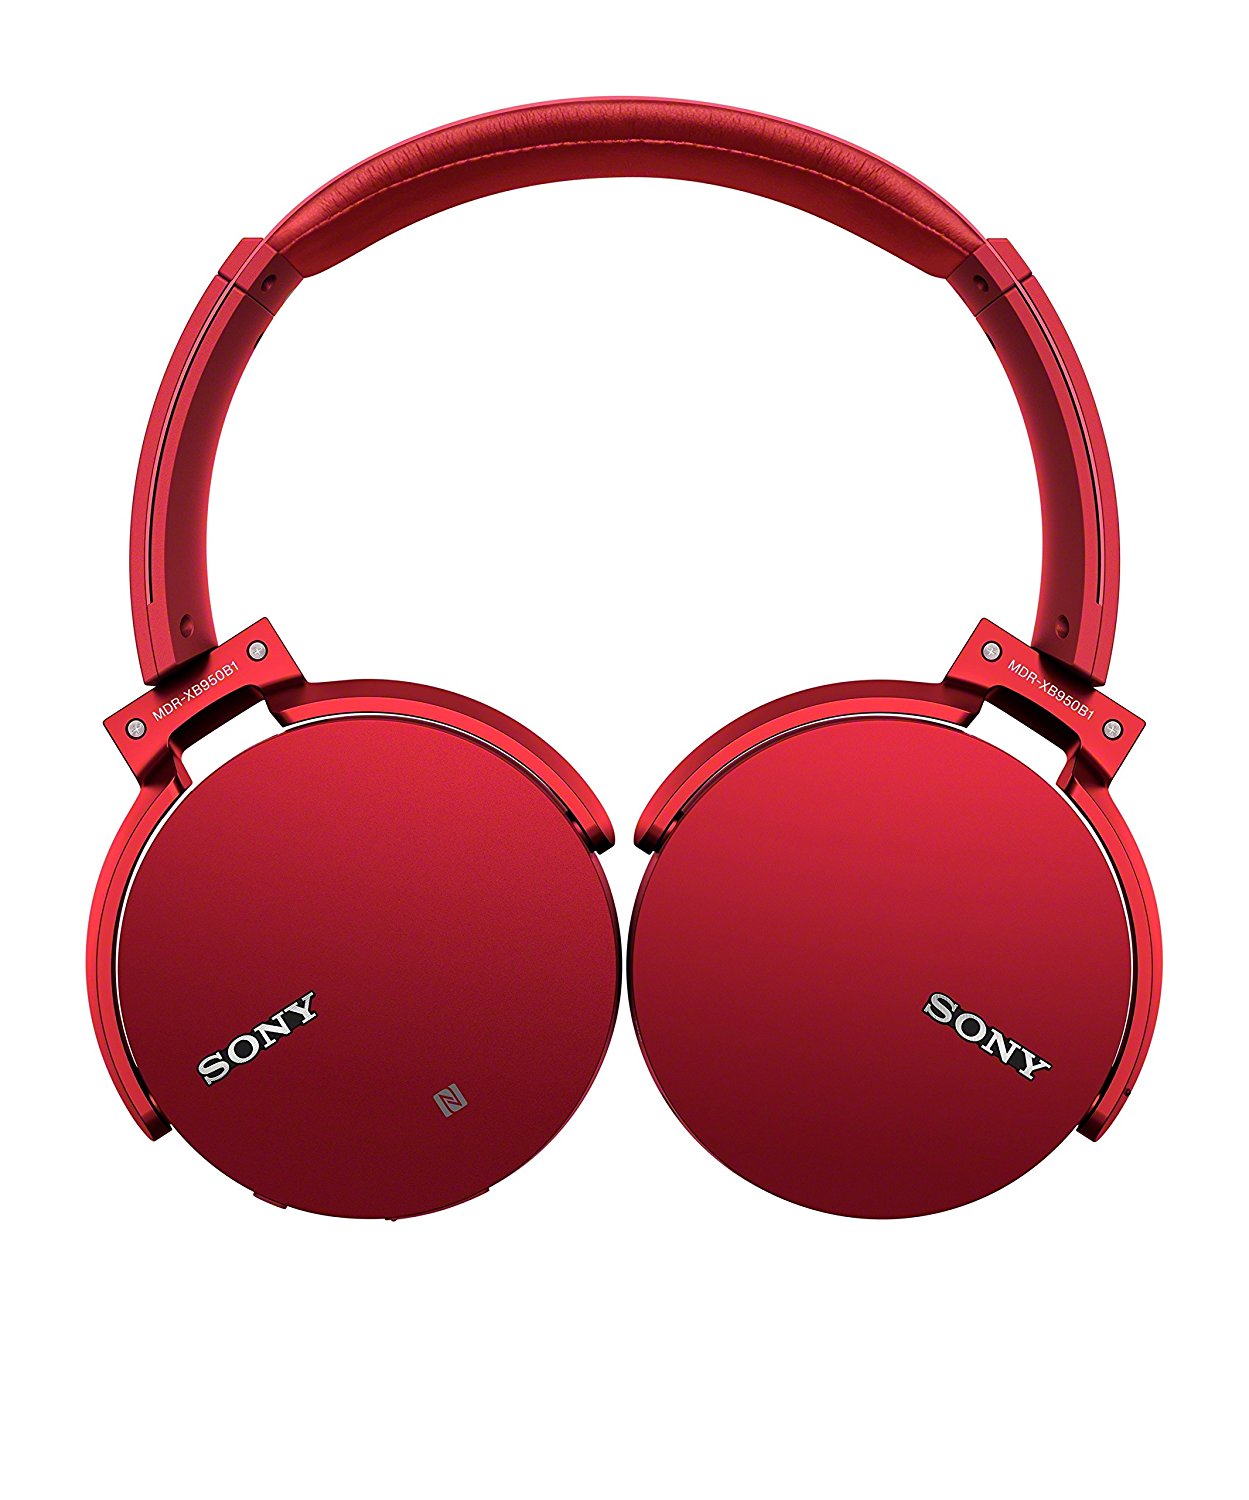 Sony MDR-XB950B1 - Headphones - on-ear - wireless - Bluetooth - red